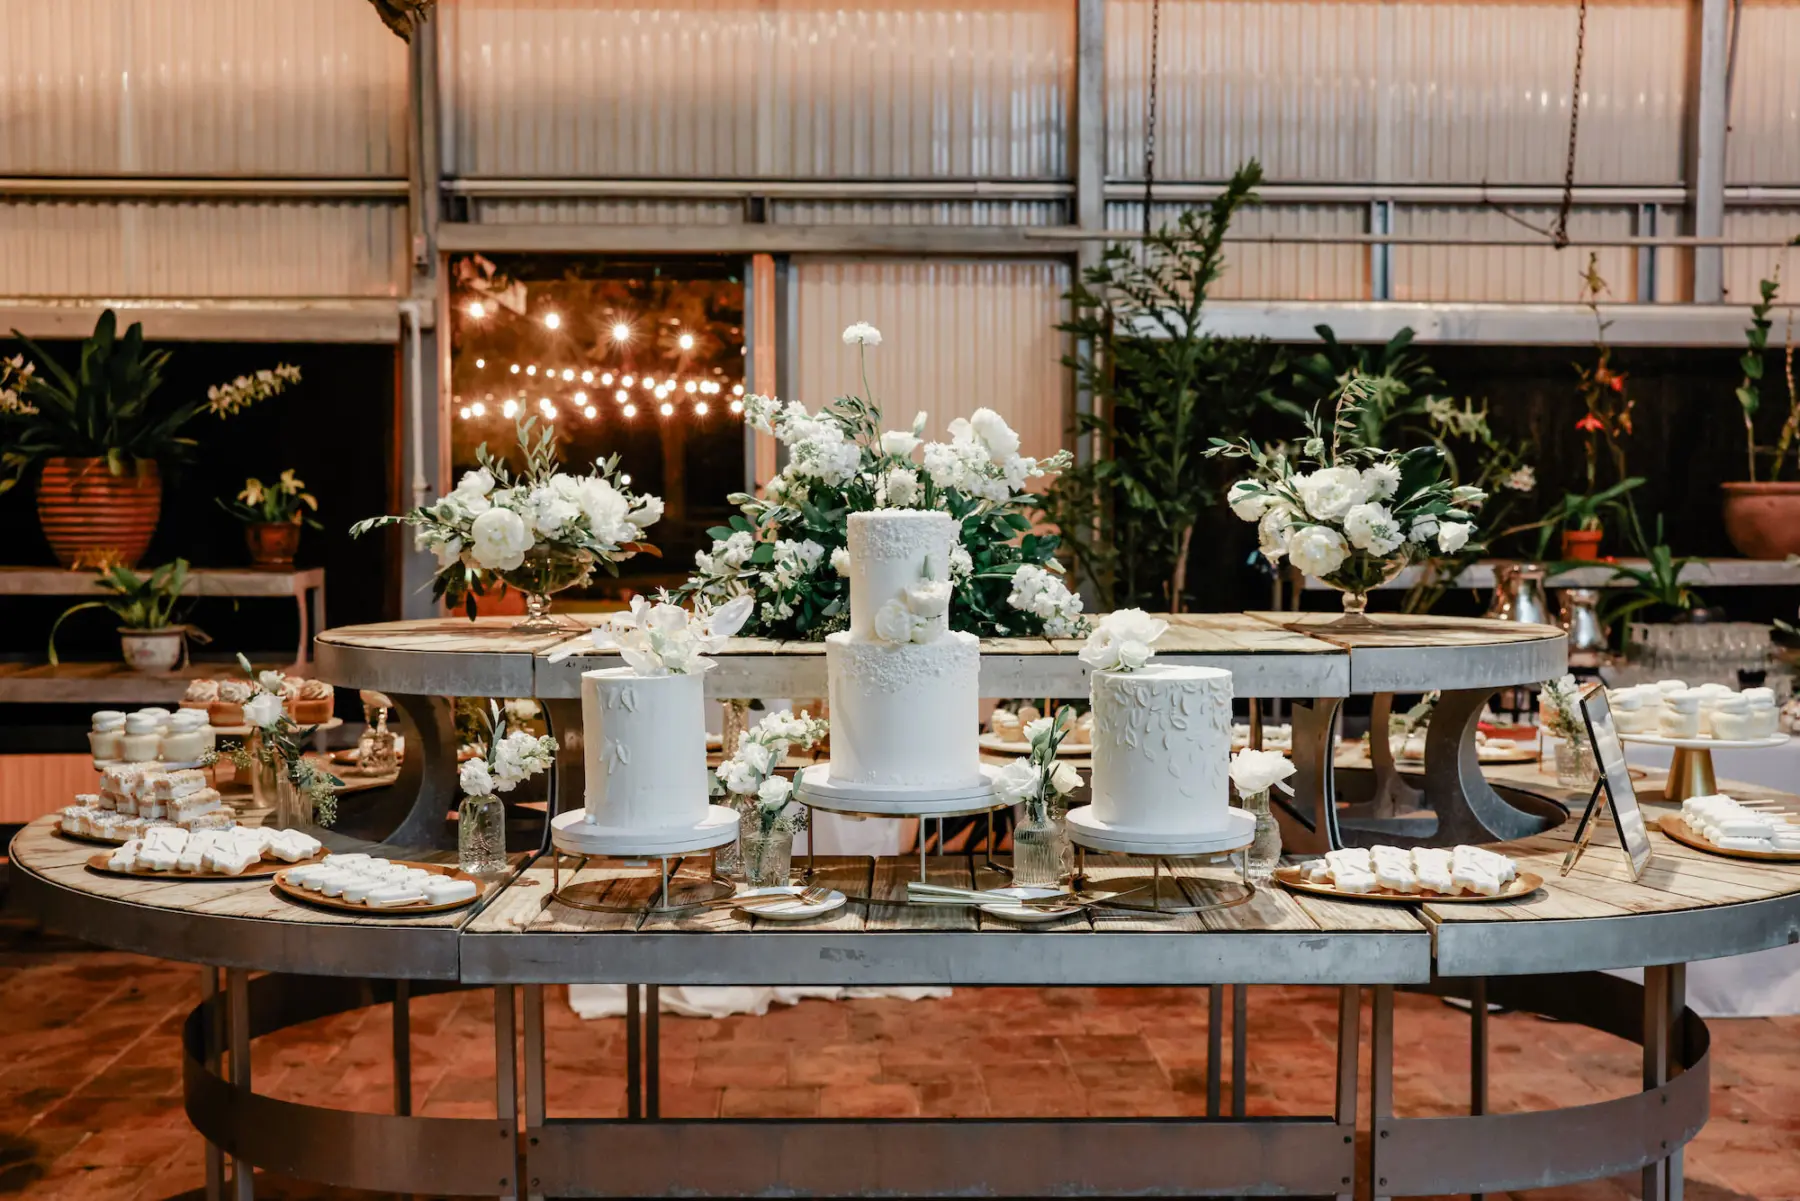 Round Multi Wedding Cake and Dessert Table Inspiration